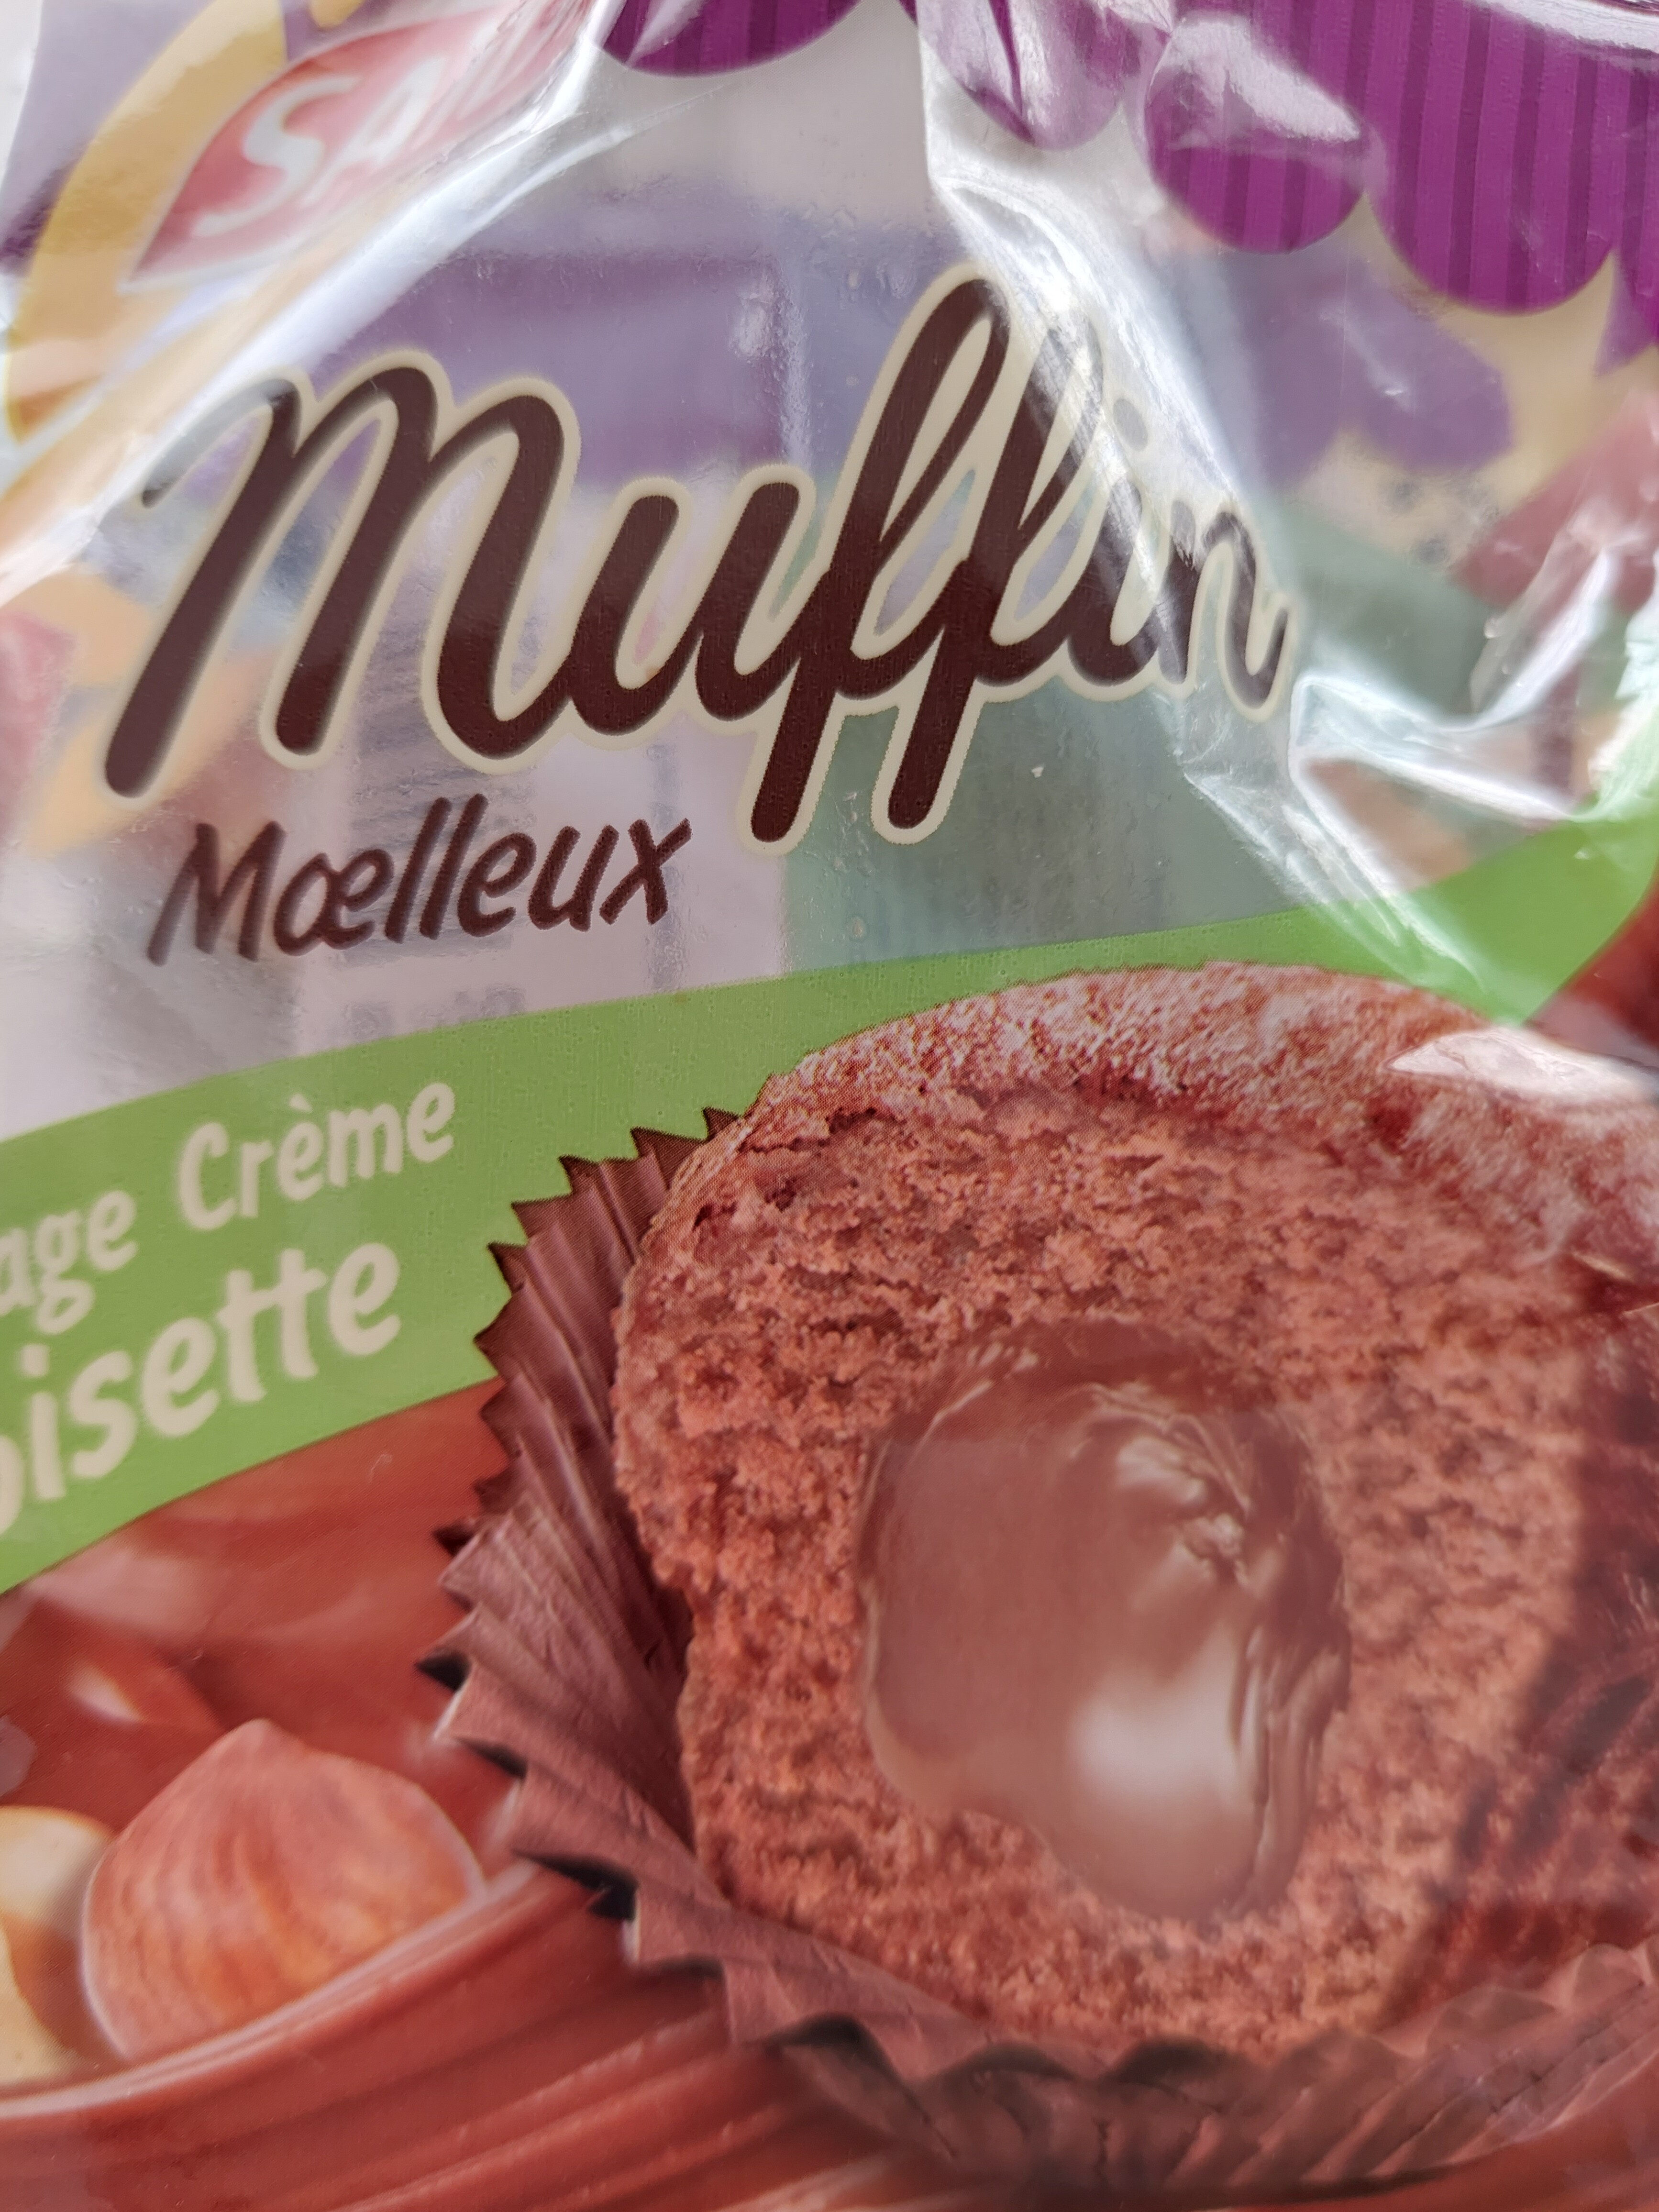 muffin fourrage crème noisette - Product - fr